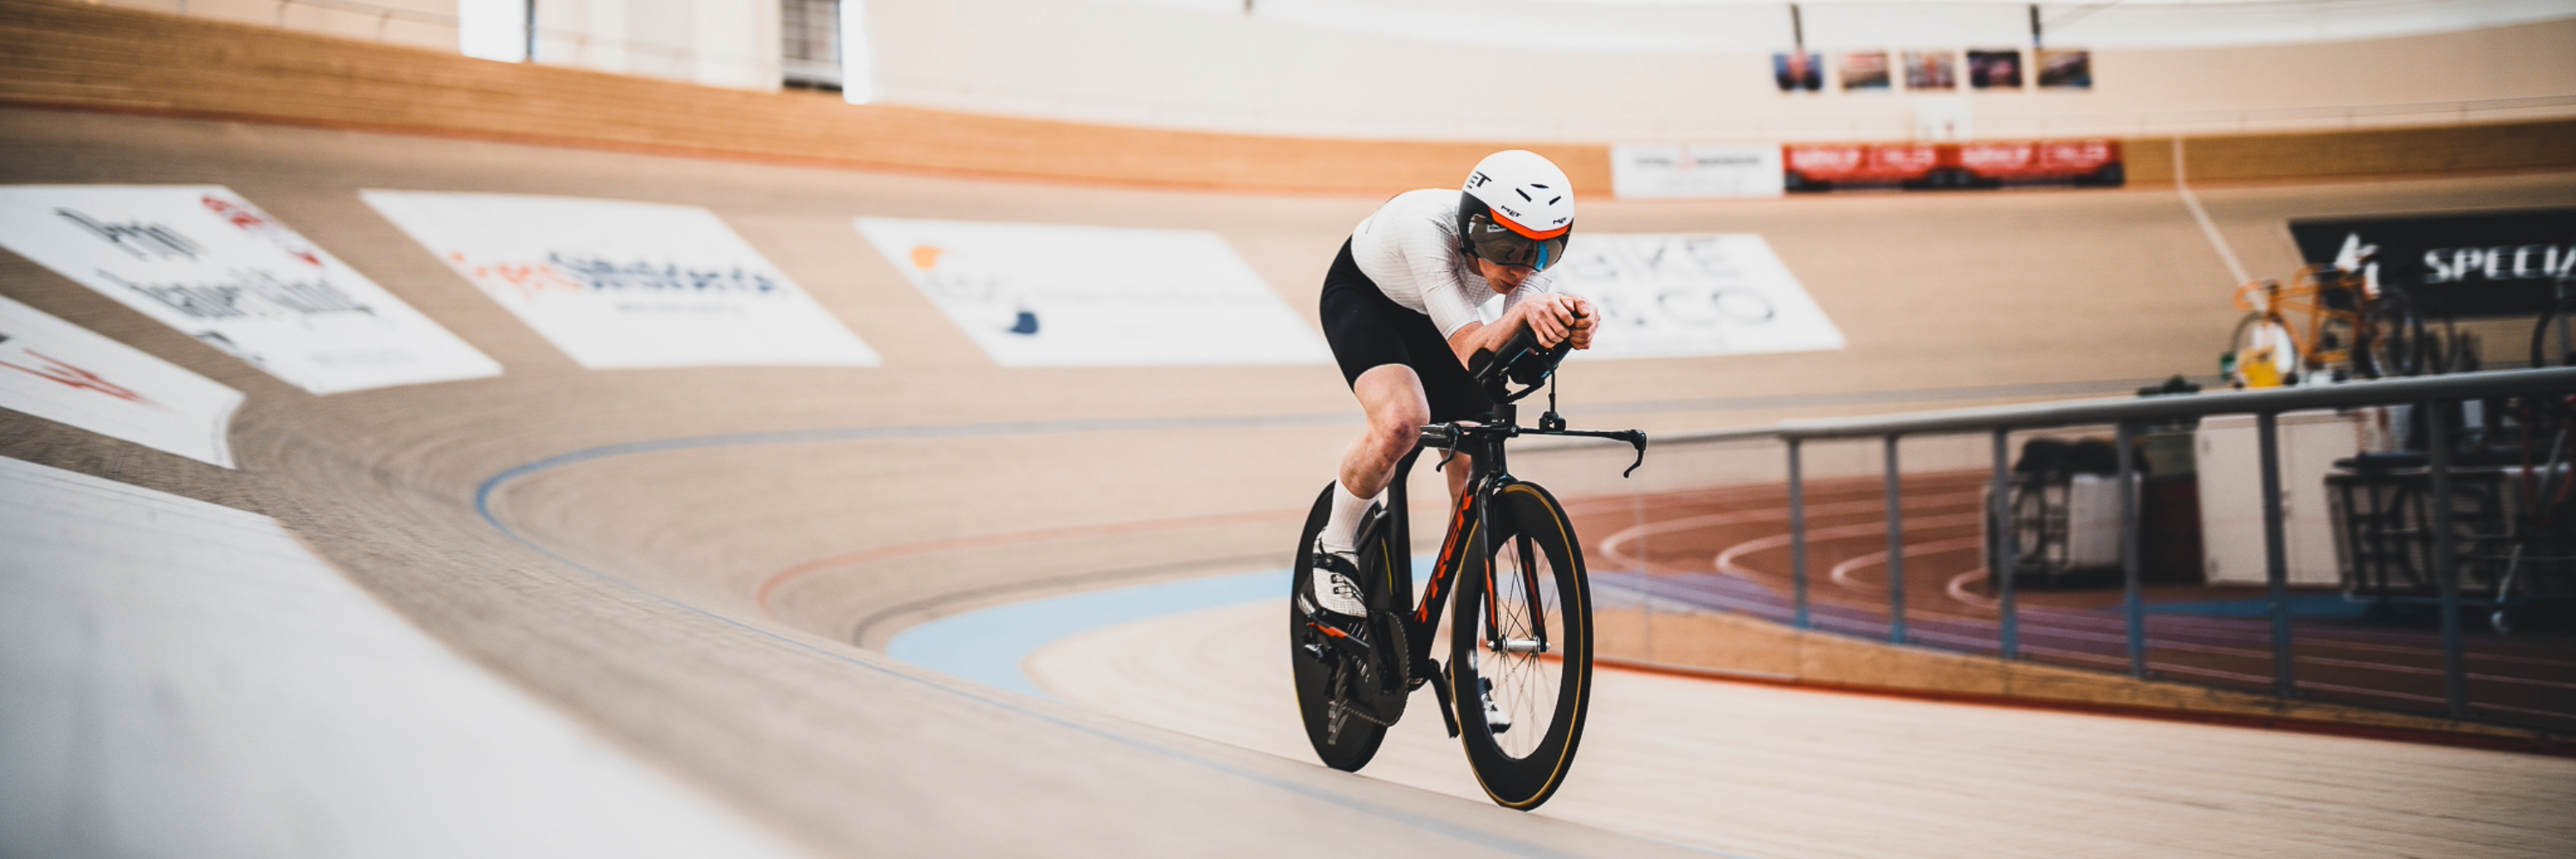 aerodynamic velodrome cyclist using aerosensor cycling system in Denmark